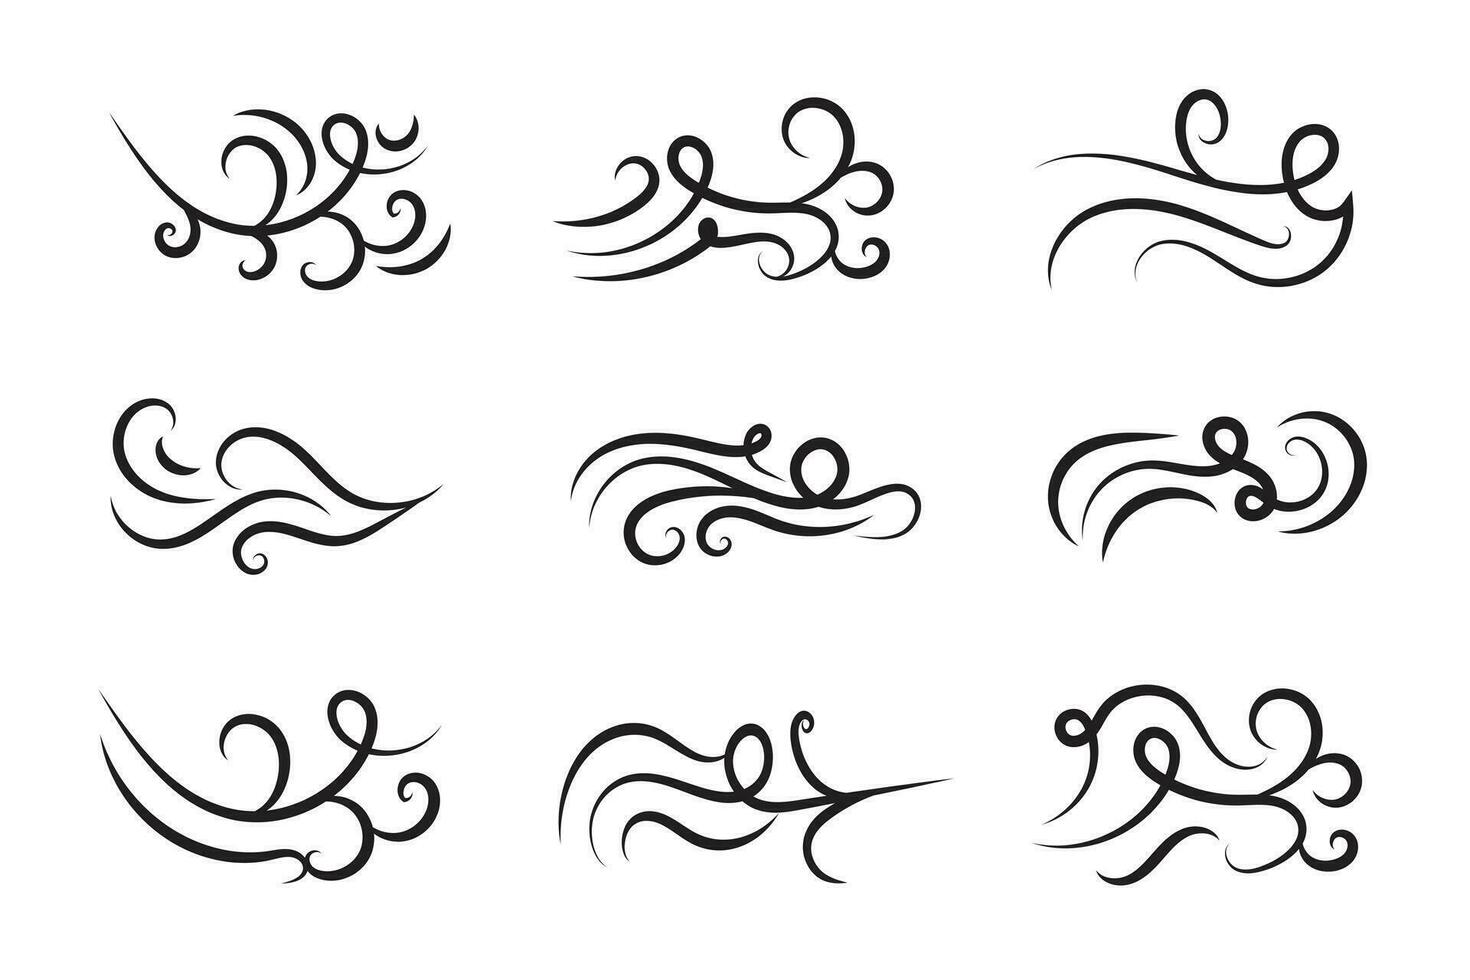 Vintage Filigree Swirls, calligraphy Tattoo style Decorative Elements, Text Ornaments curly line swings swashes, Flourishes Swirls Elegant ornate, flourish Swirl ornament stroke, scroll design vector